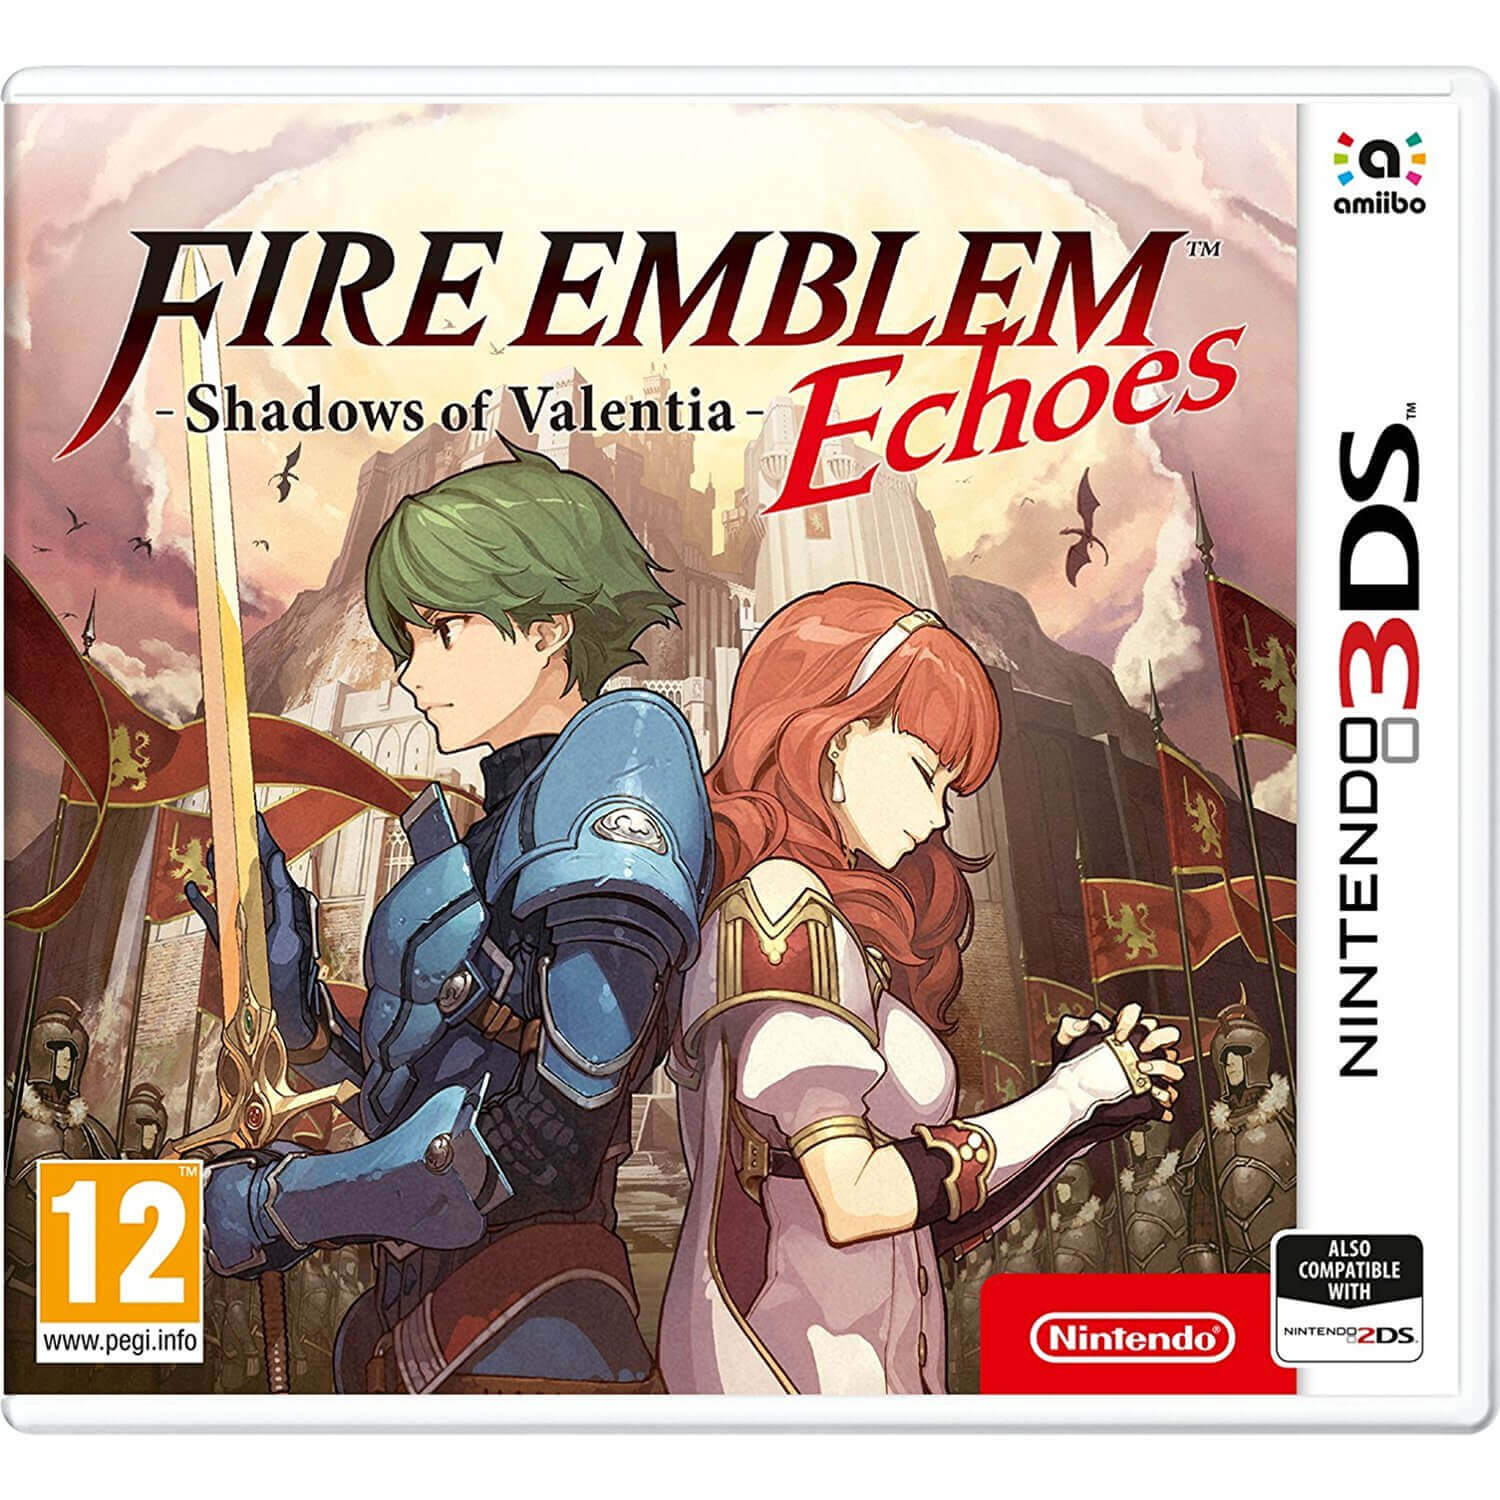  Joc Nintendo 3DS Fire Emblem Echoes Shadows of Valentia 